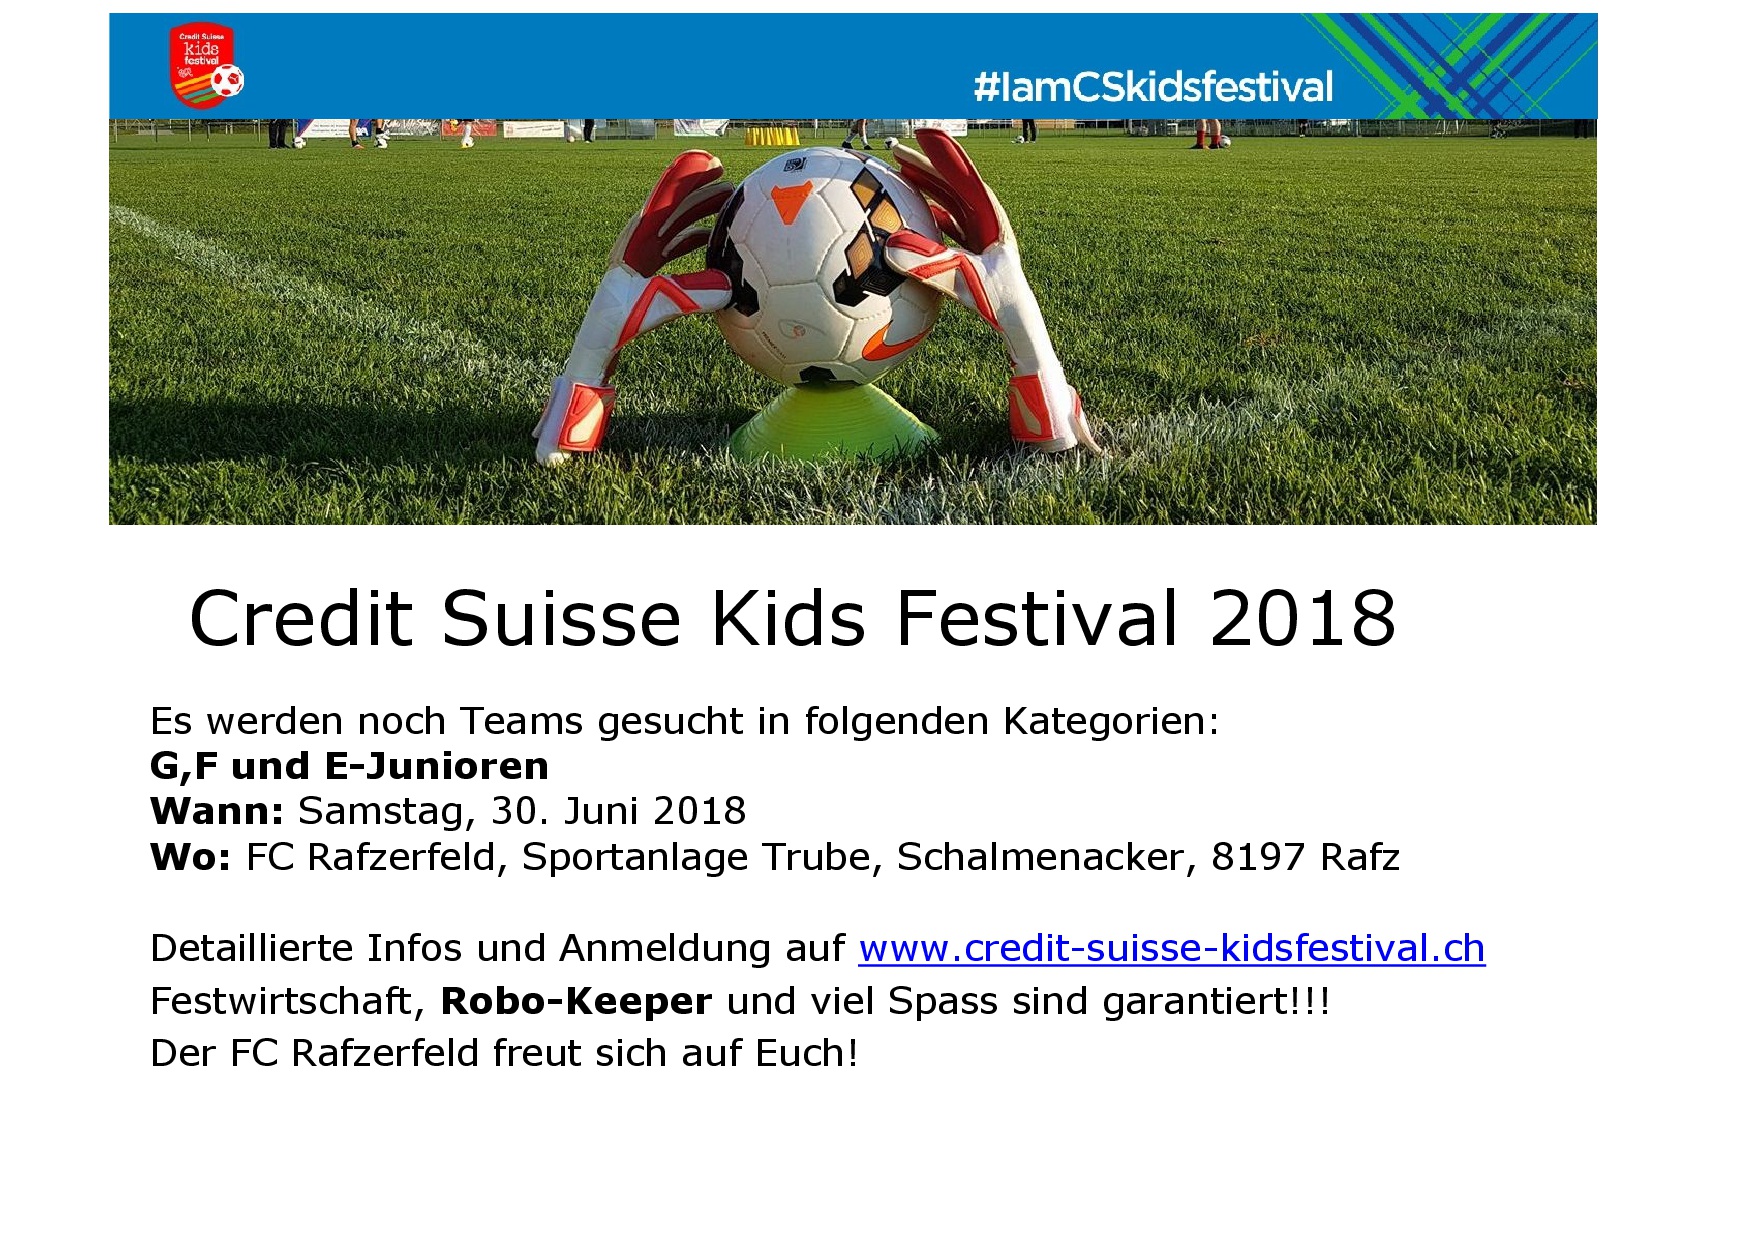 Credit Suisse Kidsfestival